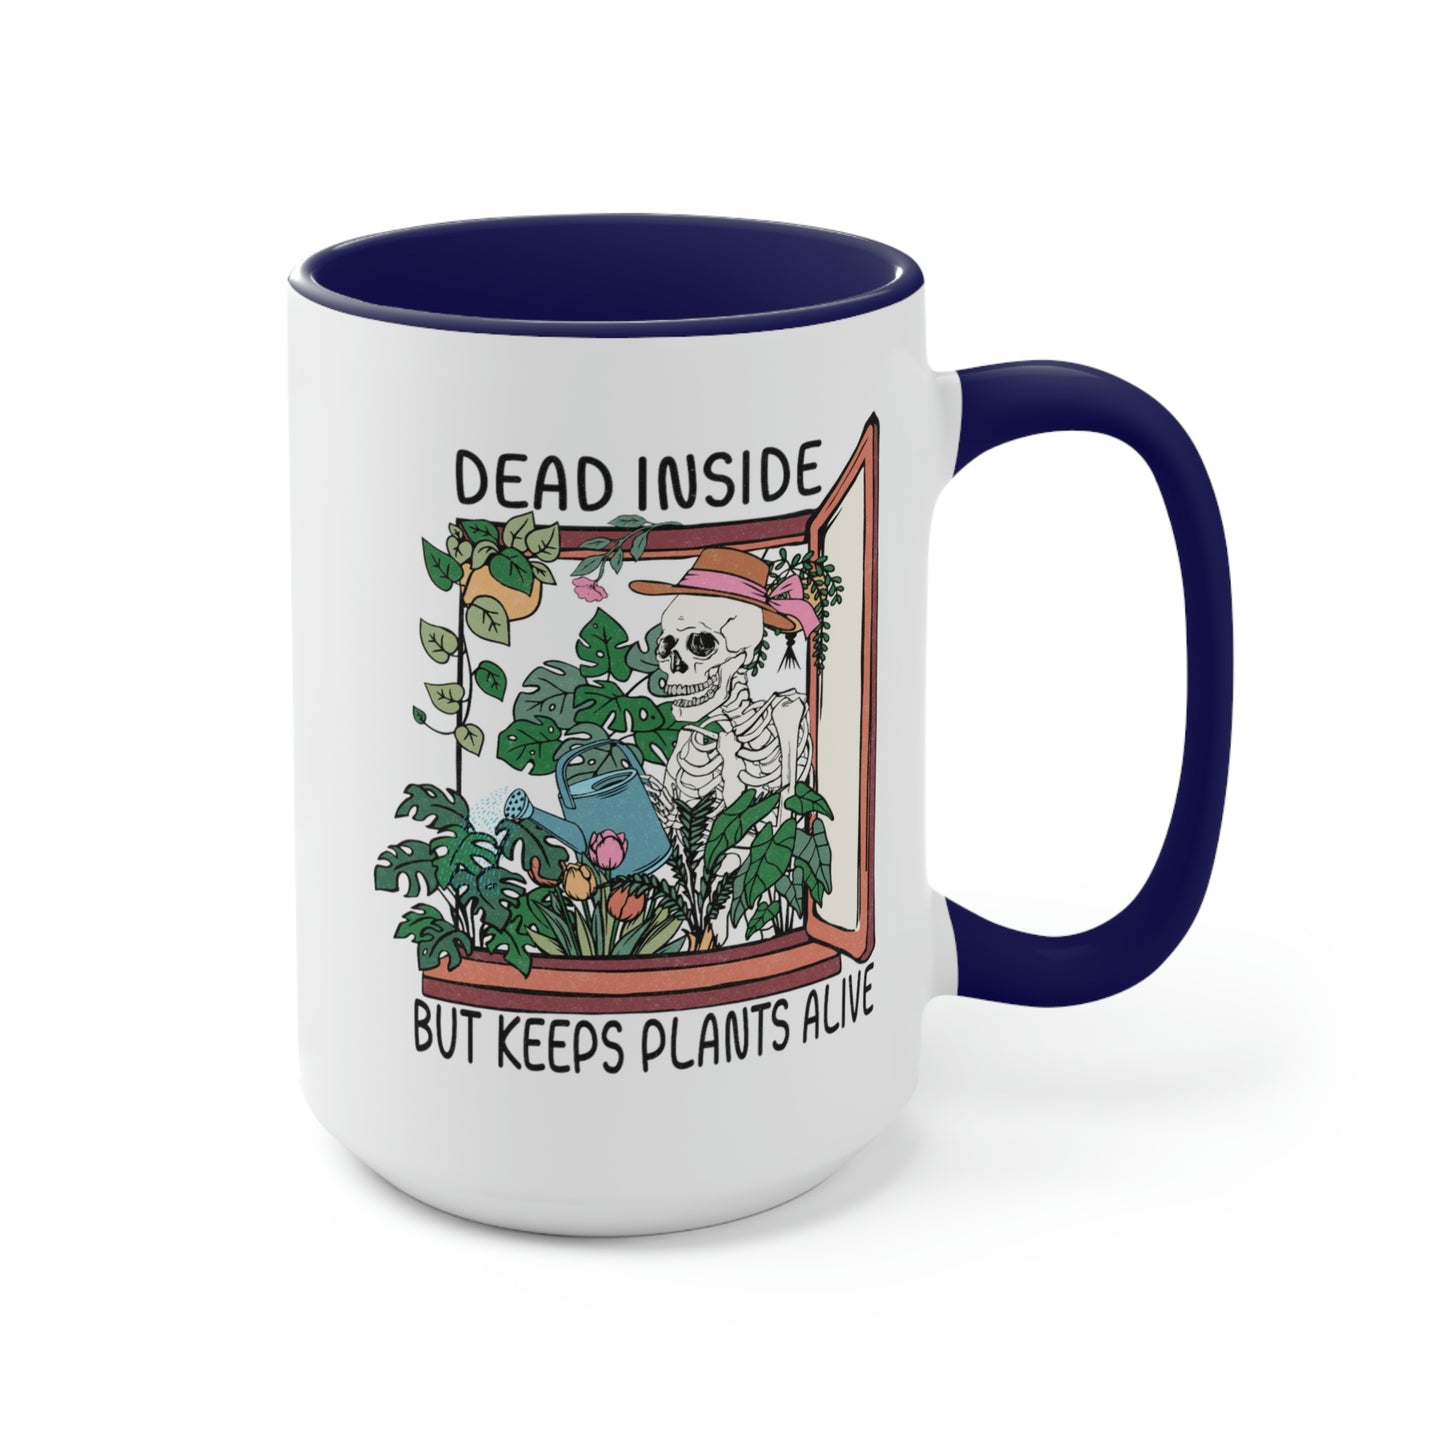 Funny plant Coffee Mugs, 15oz. Dead inside but keeps plants alive